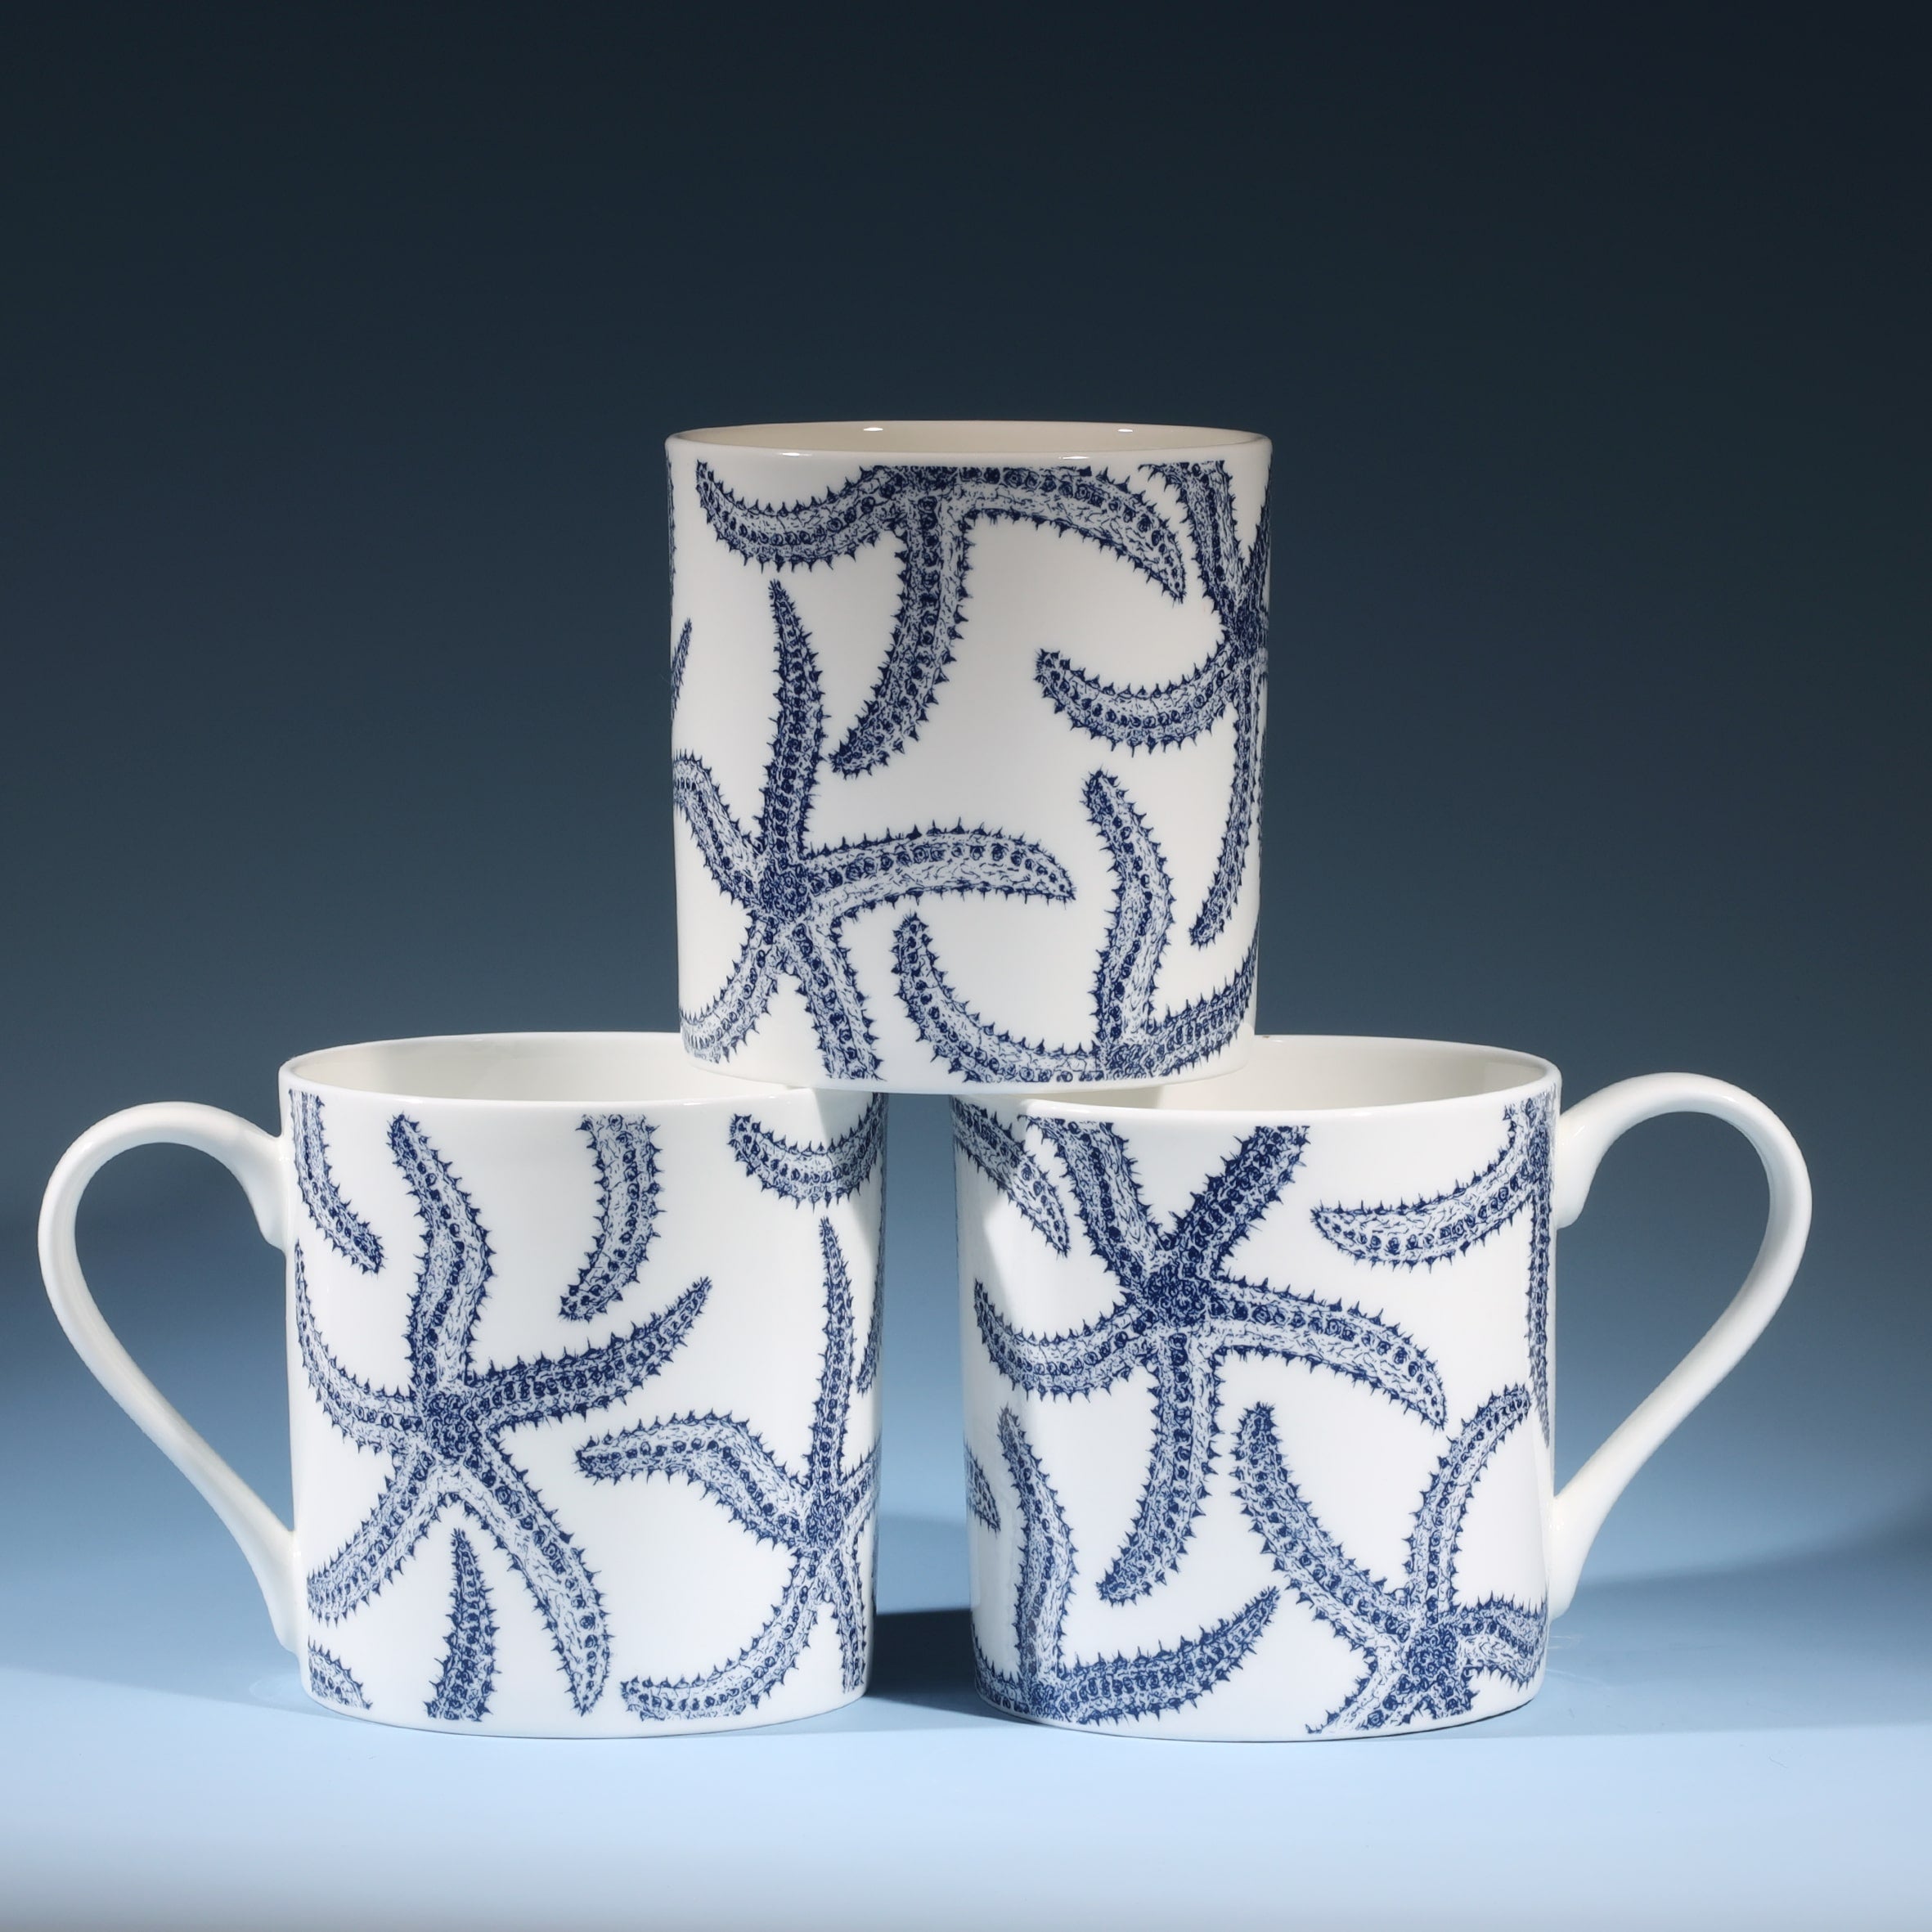 Bone china white mug featuring hand drawn Starfish design in classic navy in a stack of three